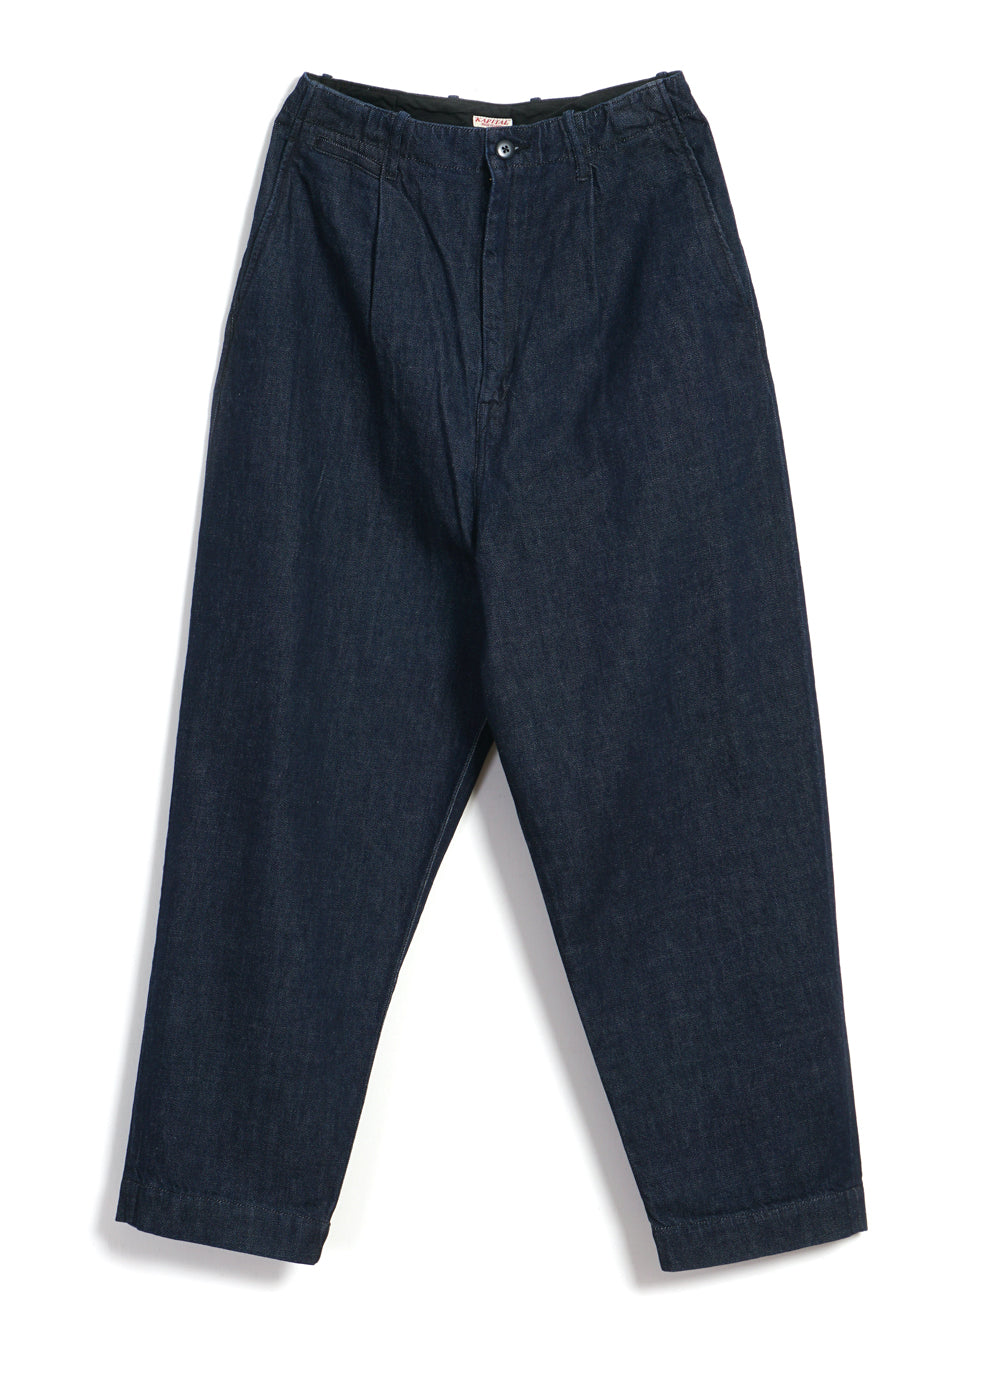 Woven Cotton Herringbone Pants with Drawcord Hems - The Numero Uno - AYR